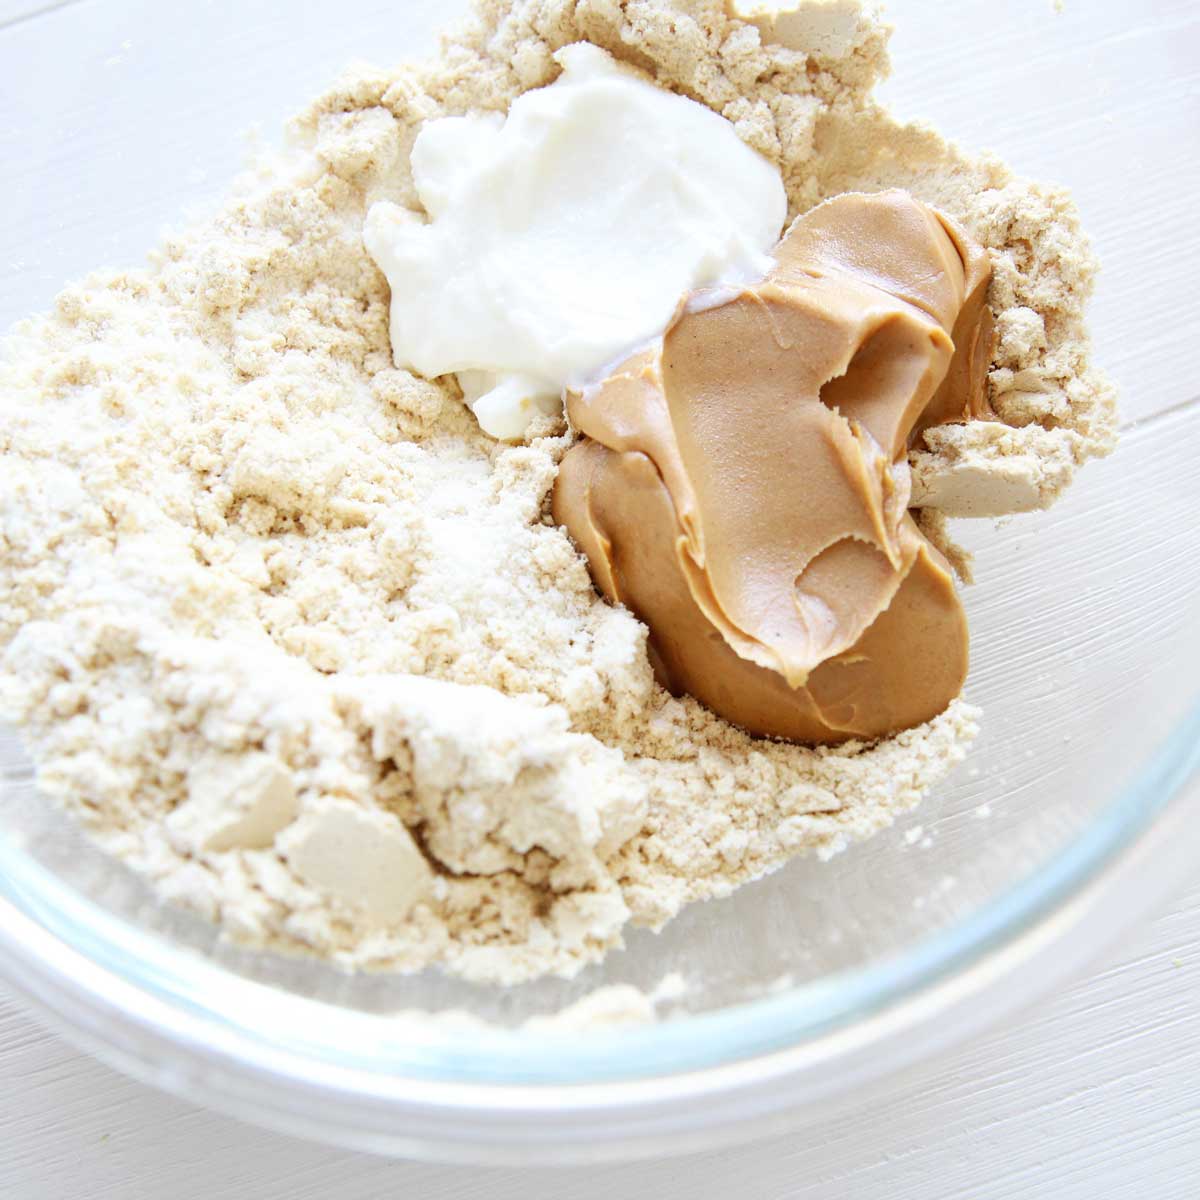 Simple Greek Yogurt Peanut Butter Protein Bars to eat for Breakfast or Post-Workout - Greek Yogurt Peanut Butter Protein Bars